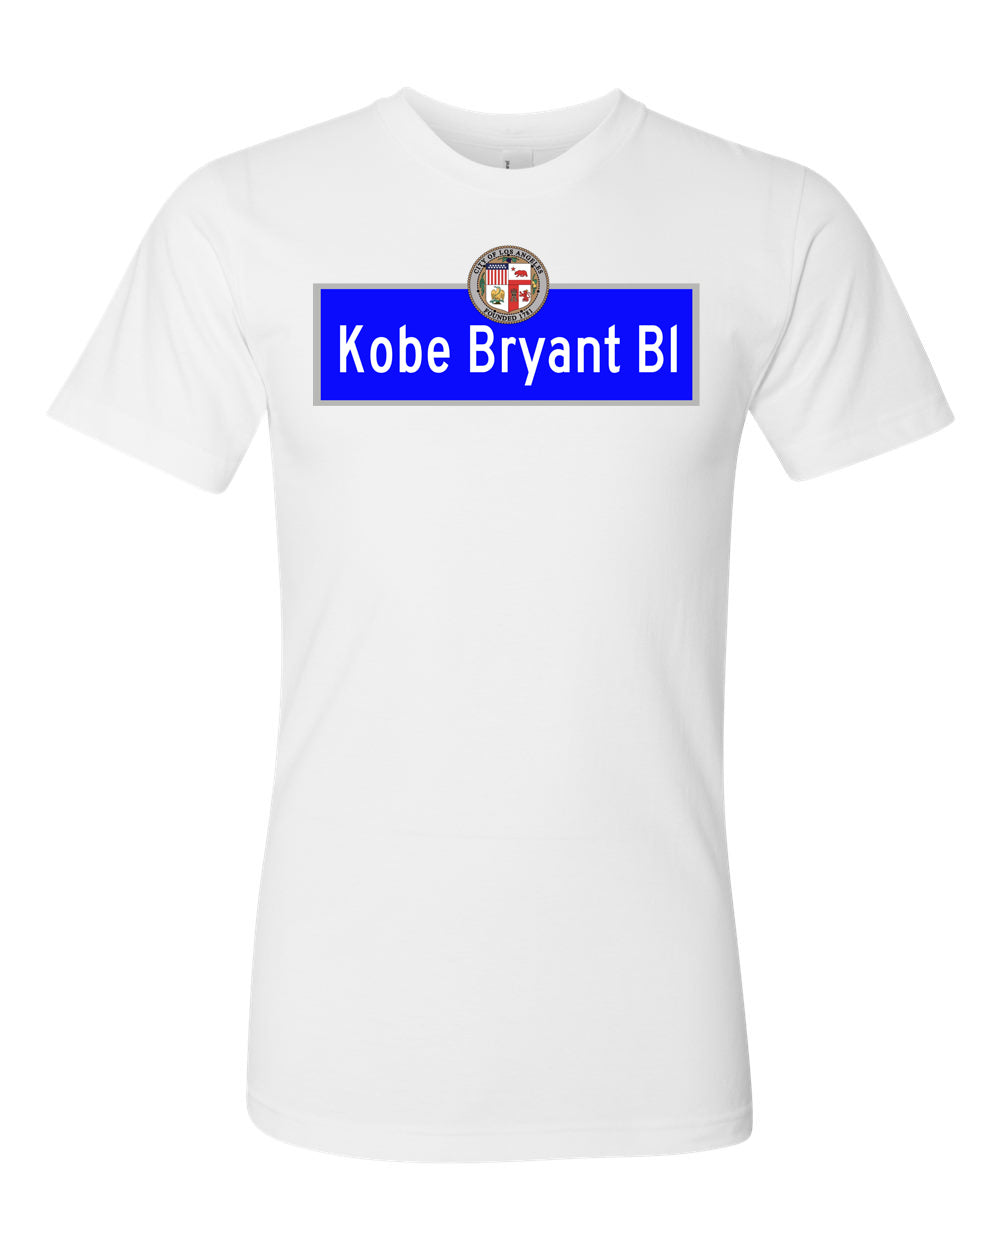 Kobe Byrant Blvd Street Sign T-Shirt